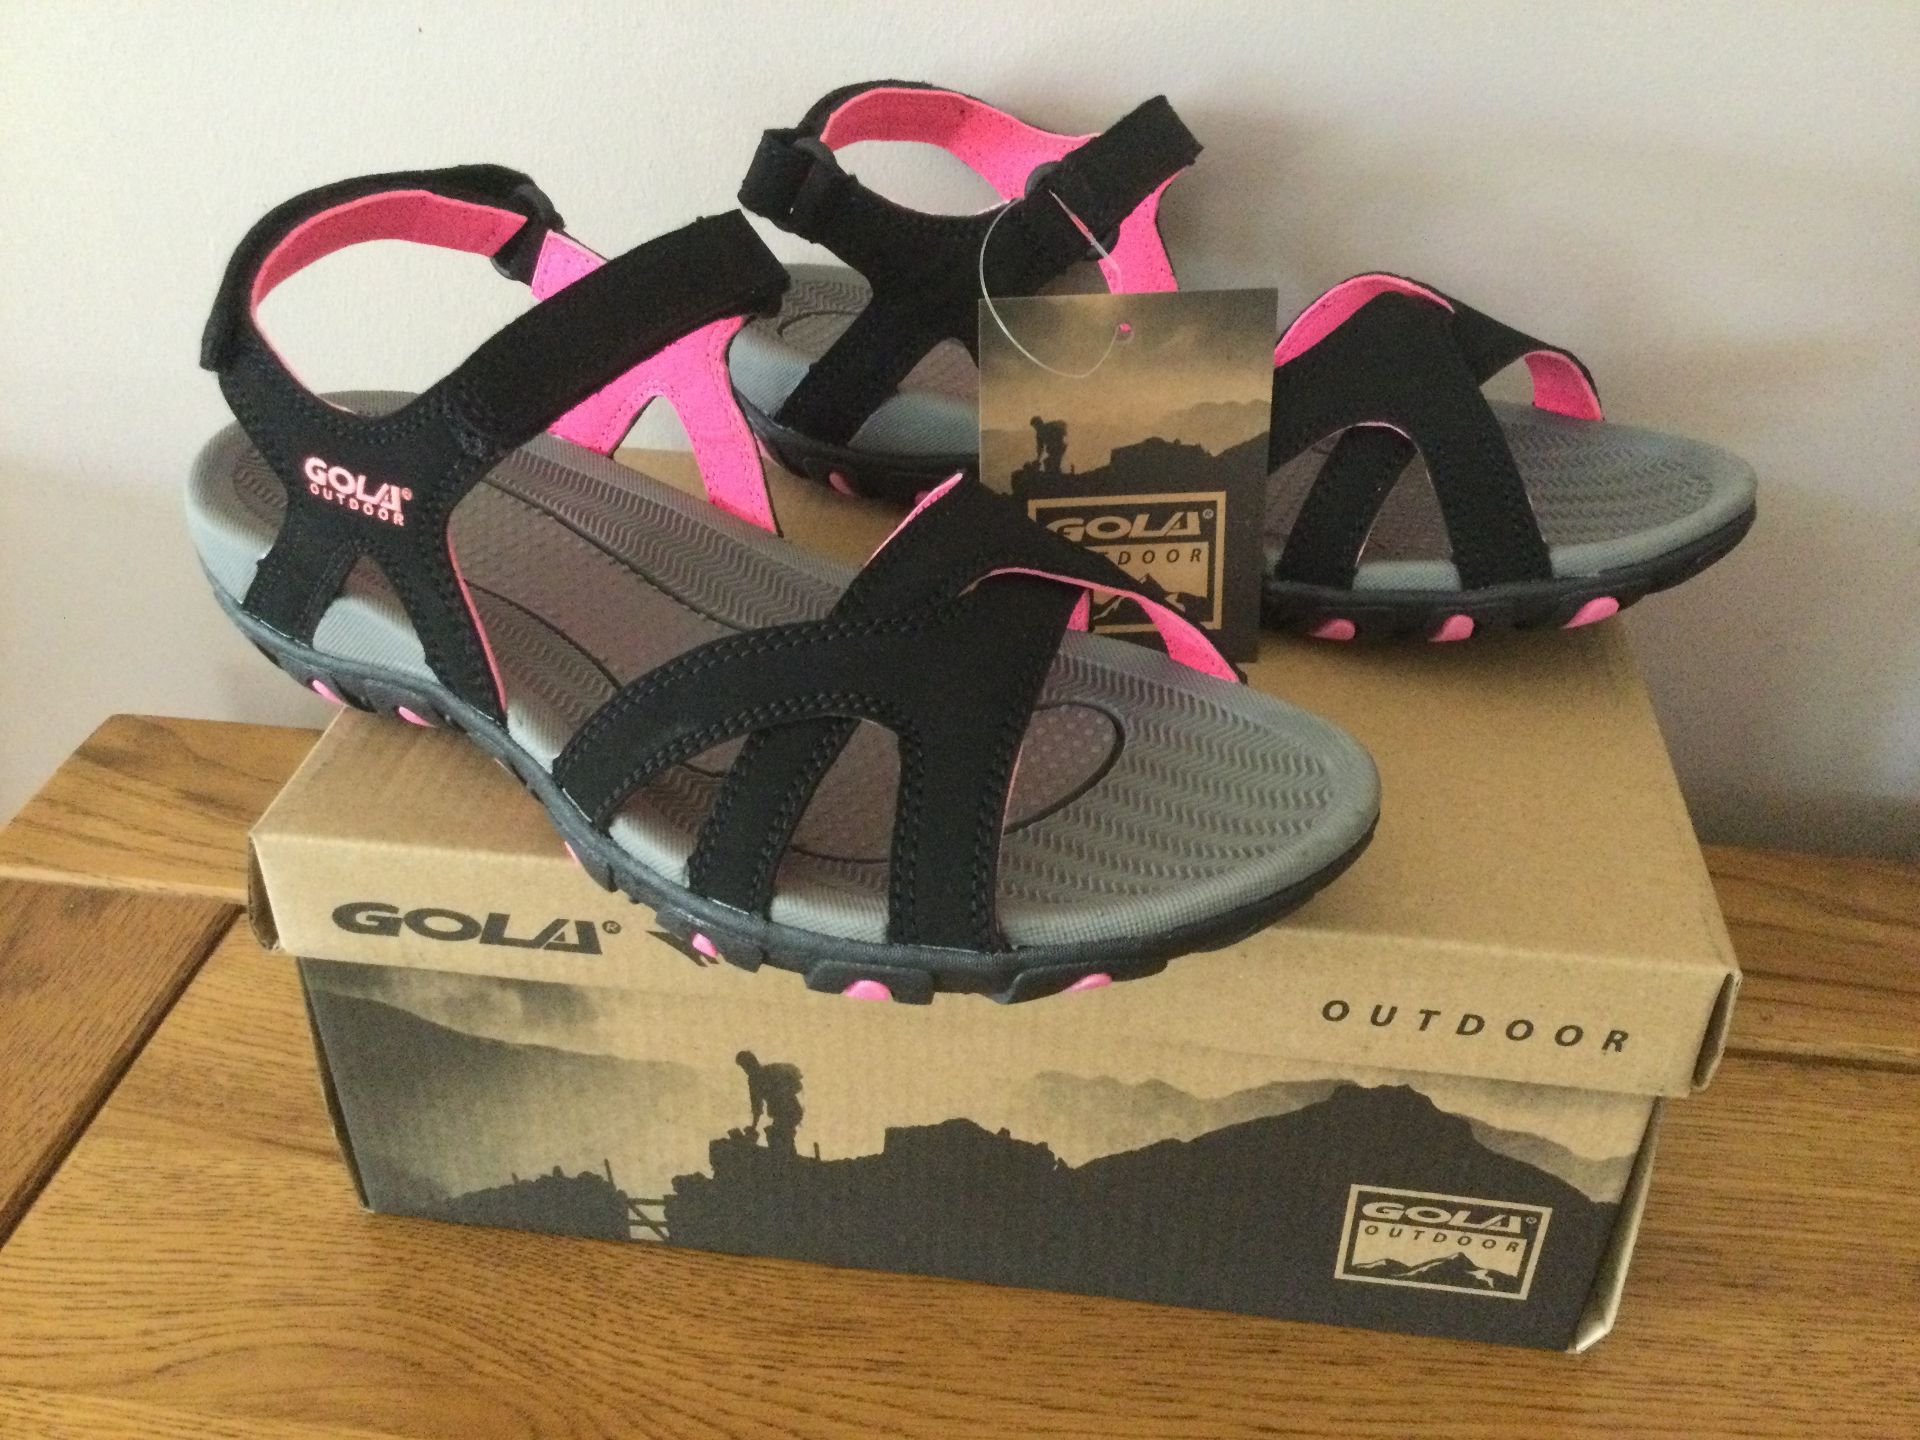 Gola Women's “Cedar” Hiking Sandals, Black/Hot Pink, Size 5 - Brand New